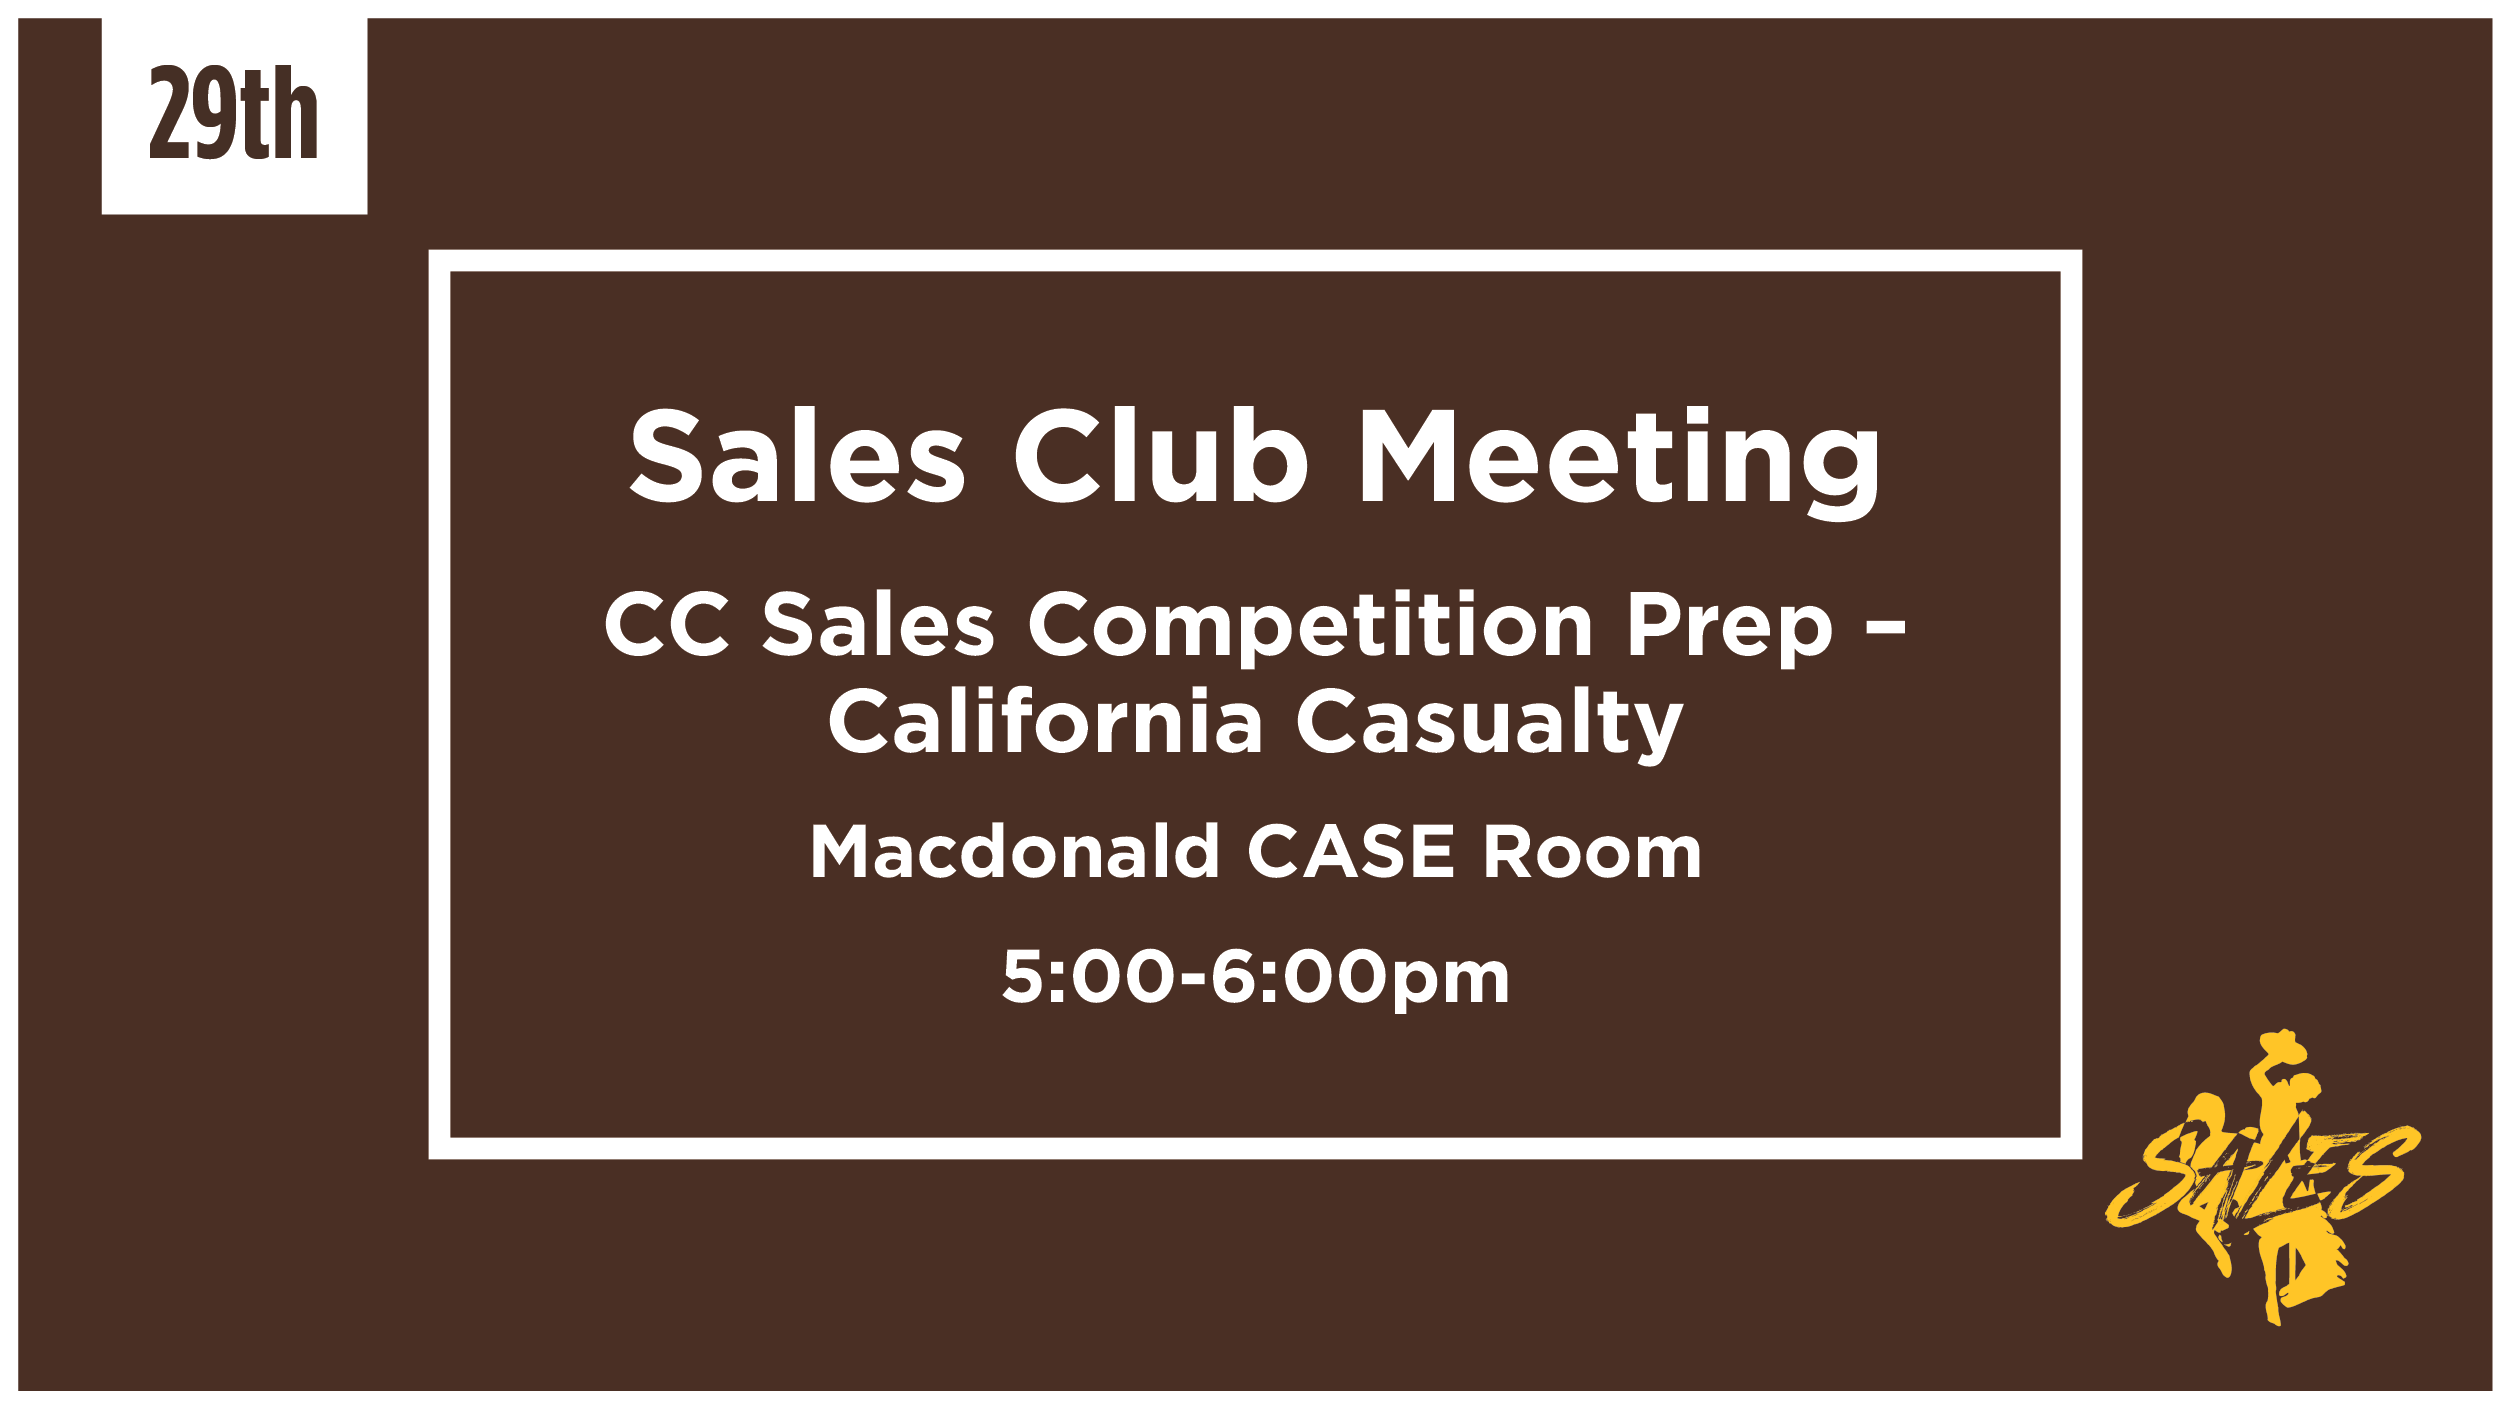 Sales Club Meeting March 29